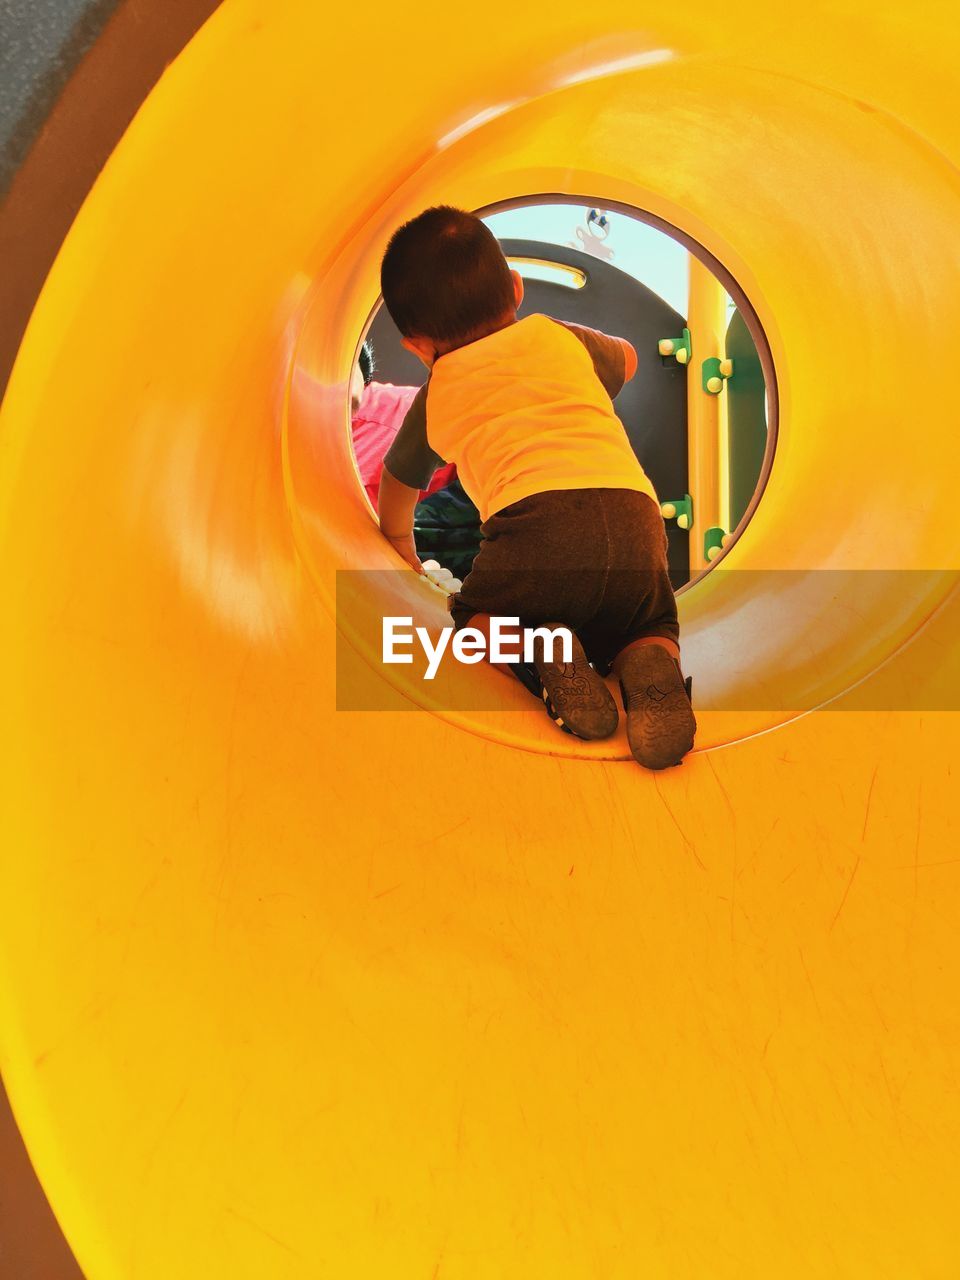 Playful boy in slide